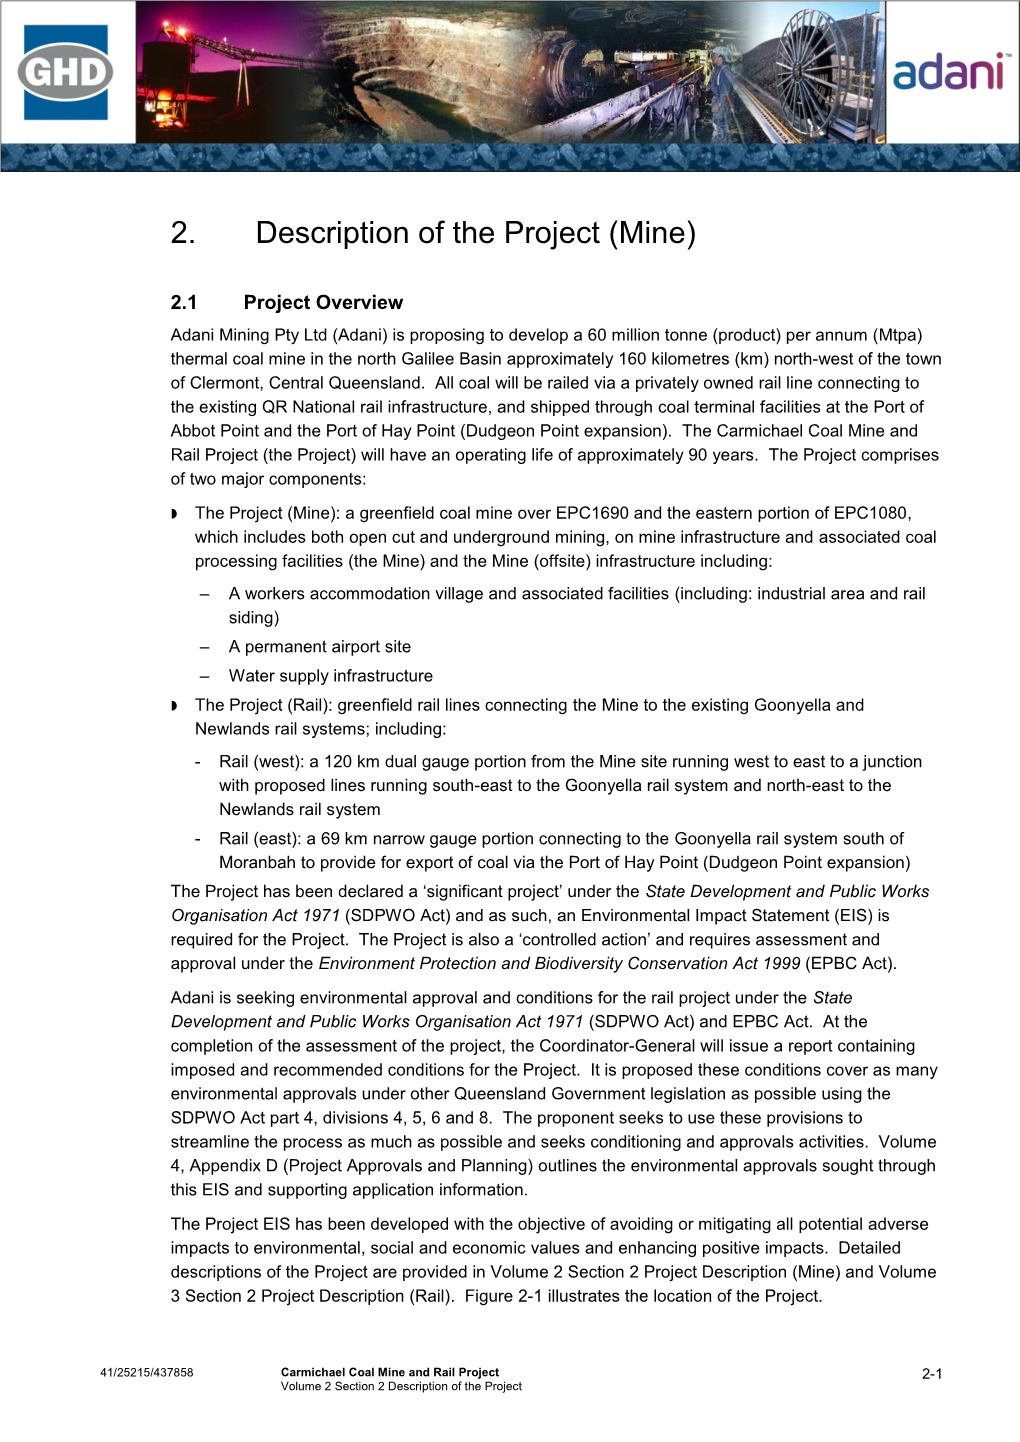 2. Description of the Project (Mine)